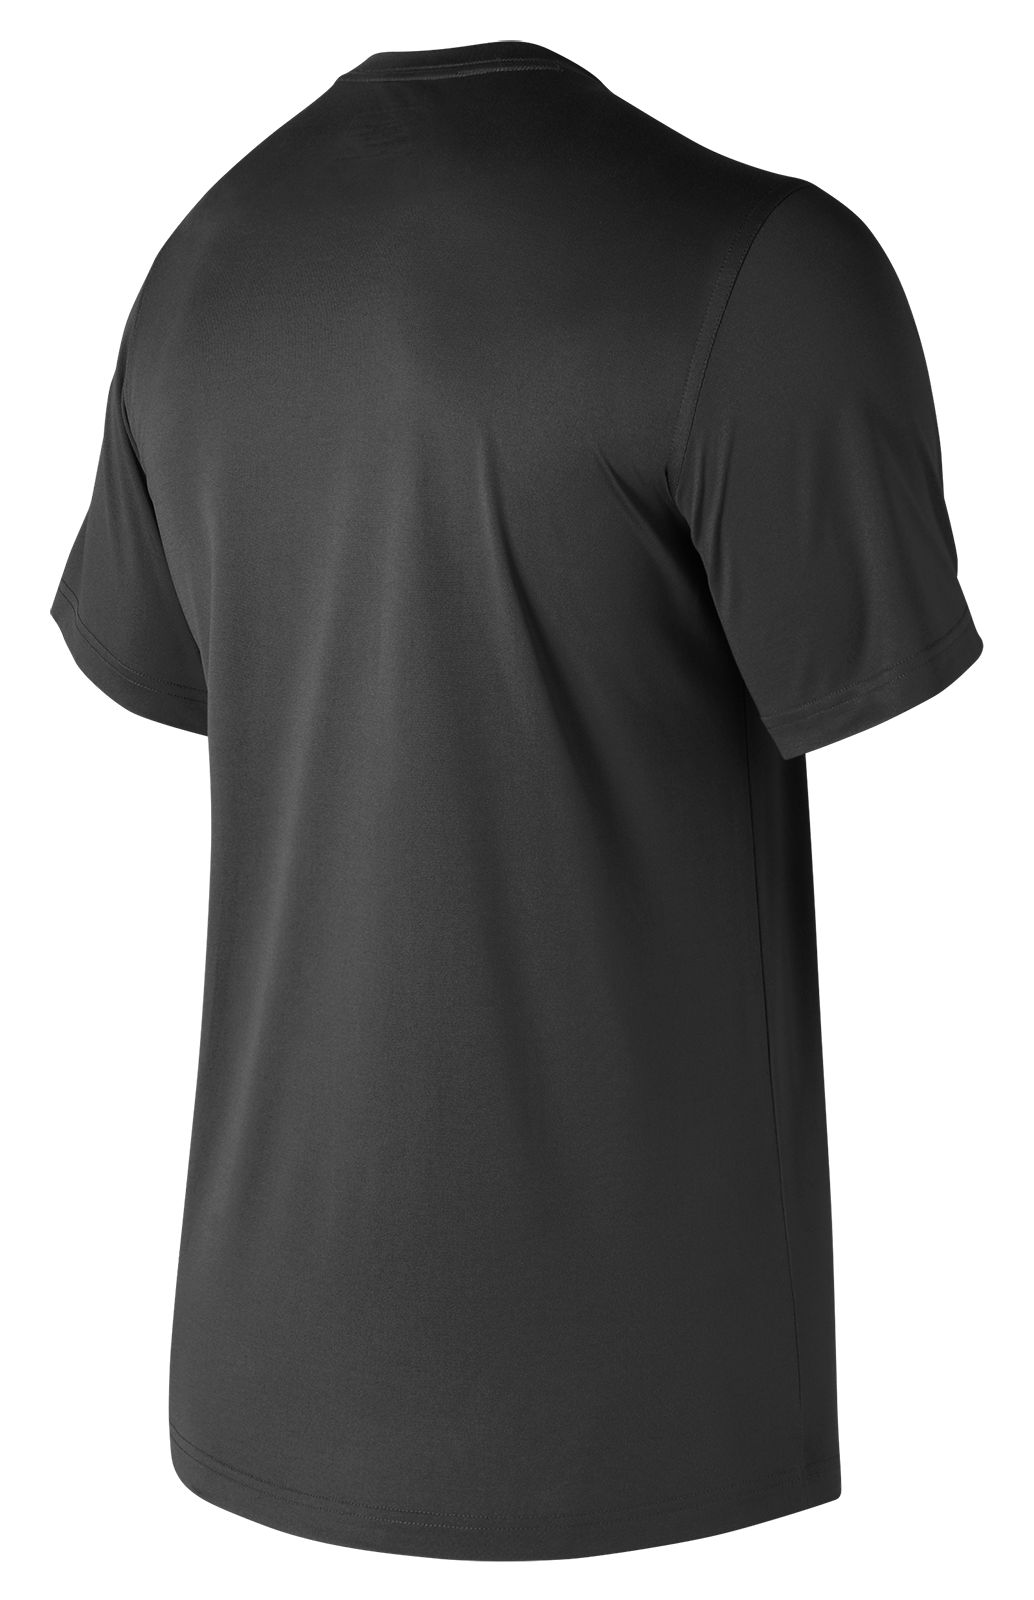 Pro Player Men's T-Shirt - Blue - XL